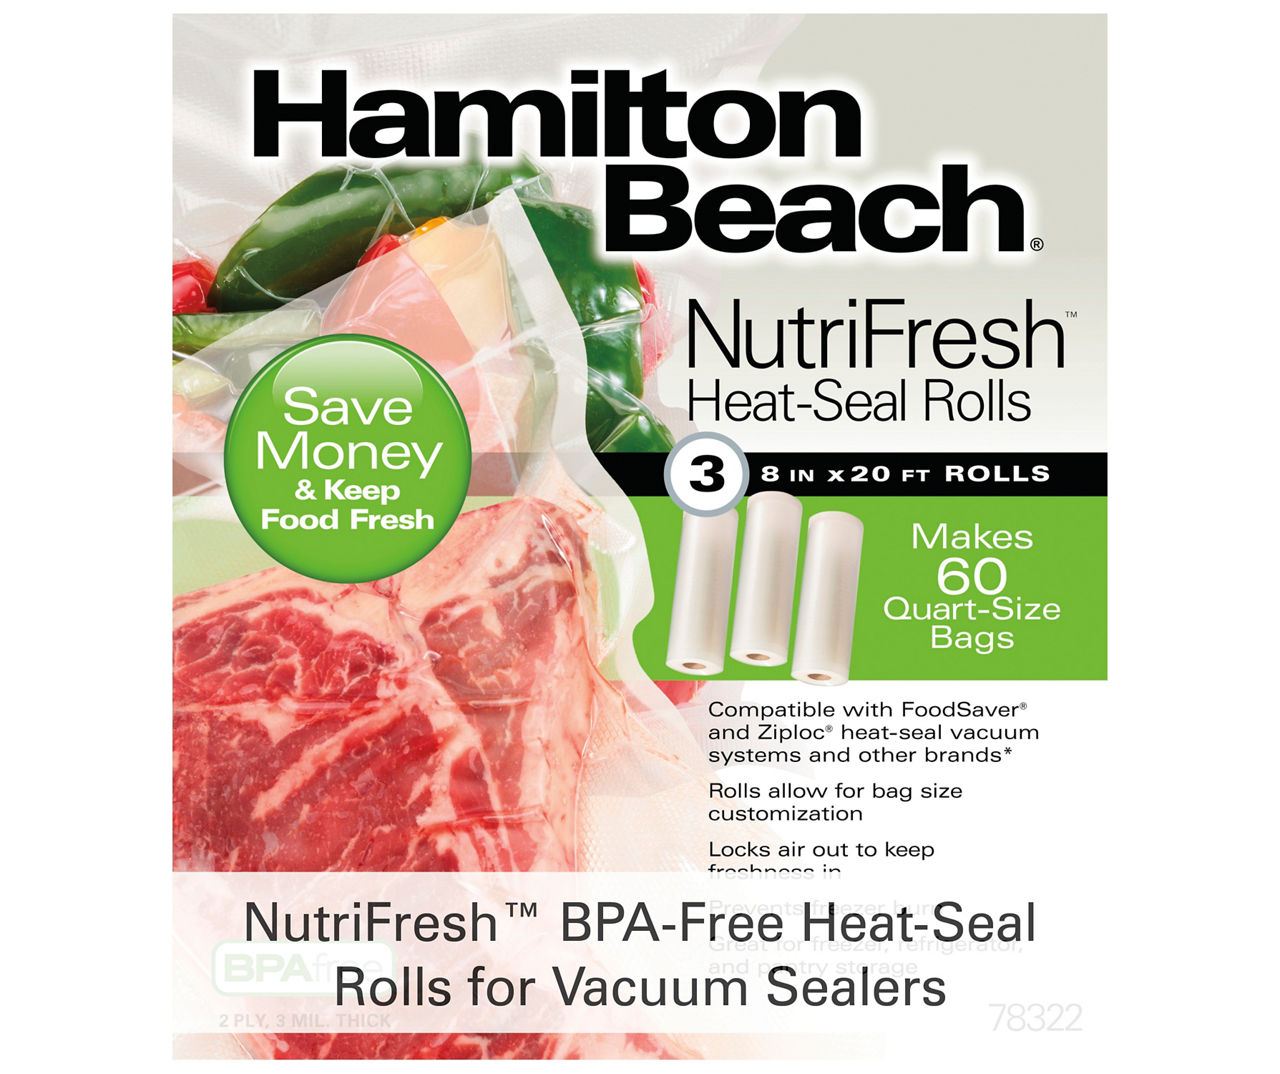 Hamilton Beach NutriFresh Heat-Seal Rolls 7 Roll Multi-Pack, 8x20